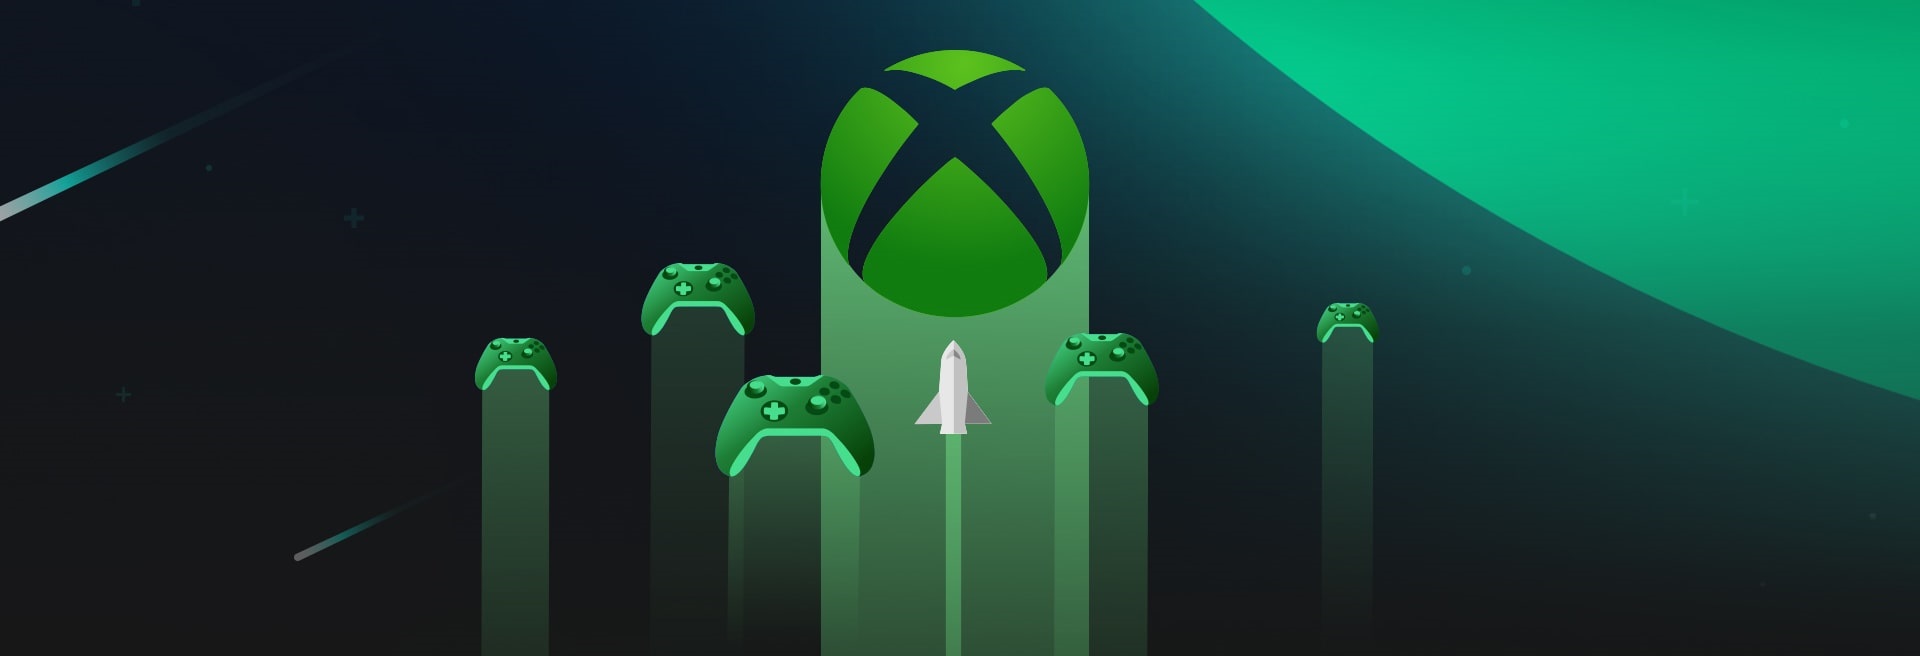 Xbox Online Festival 2021